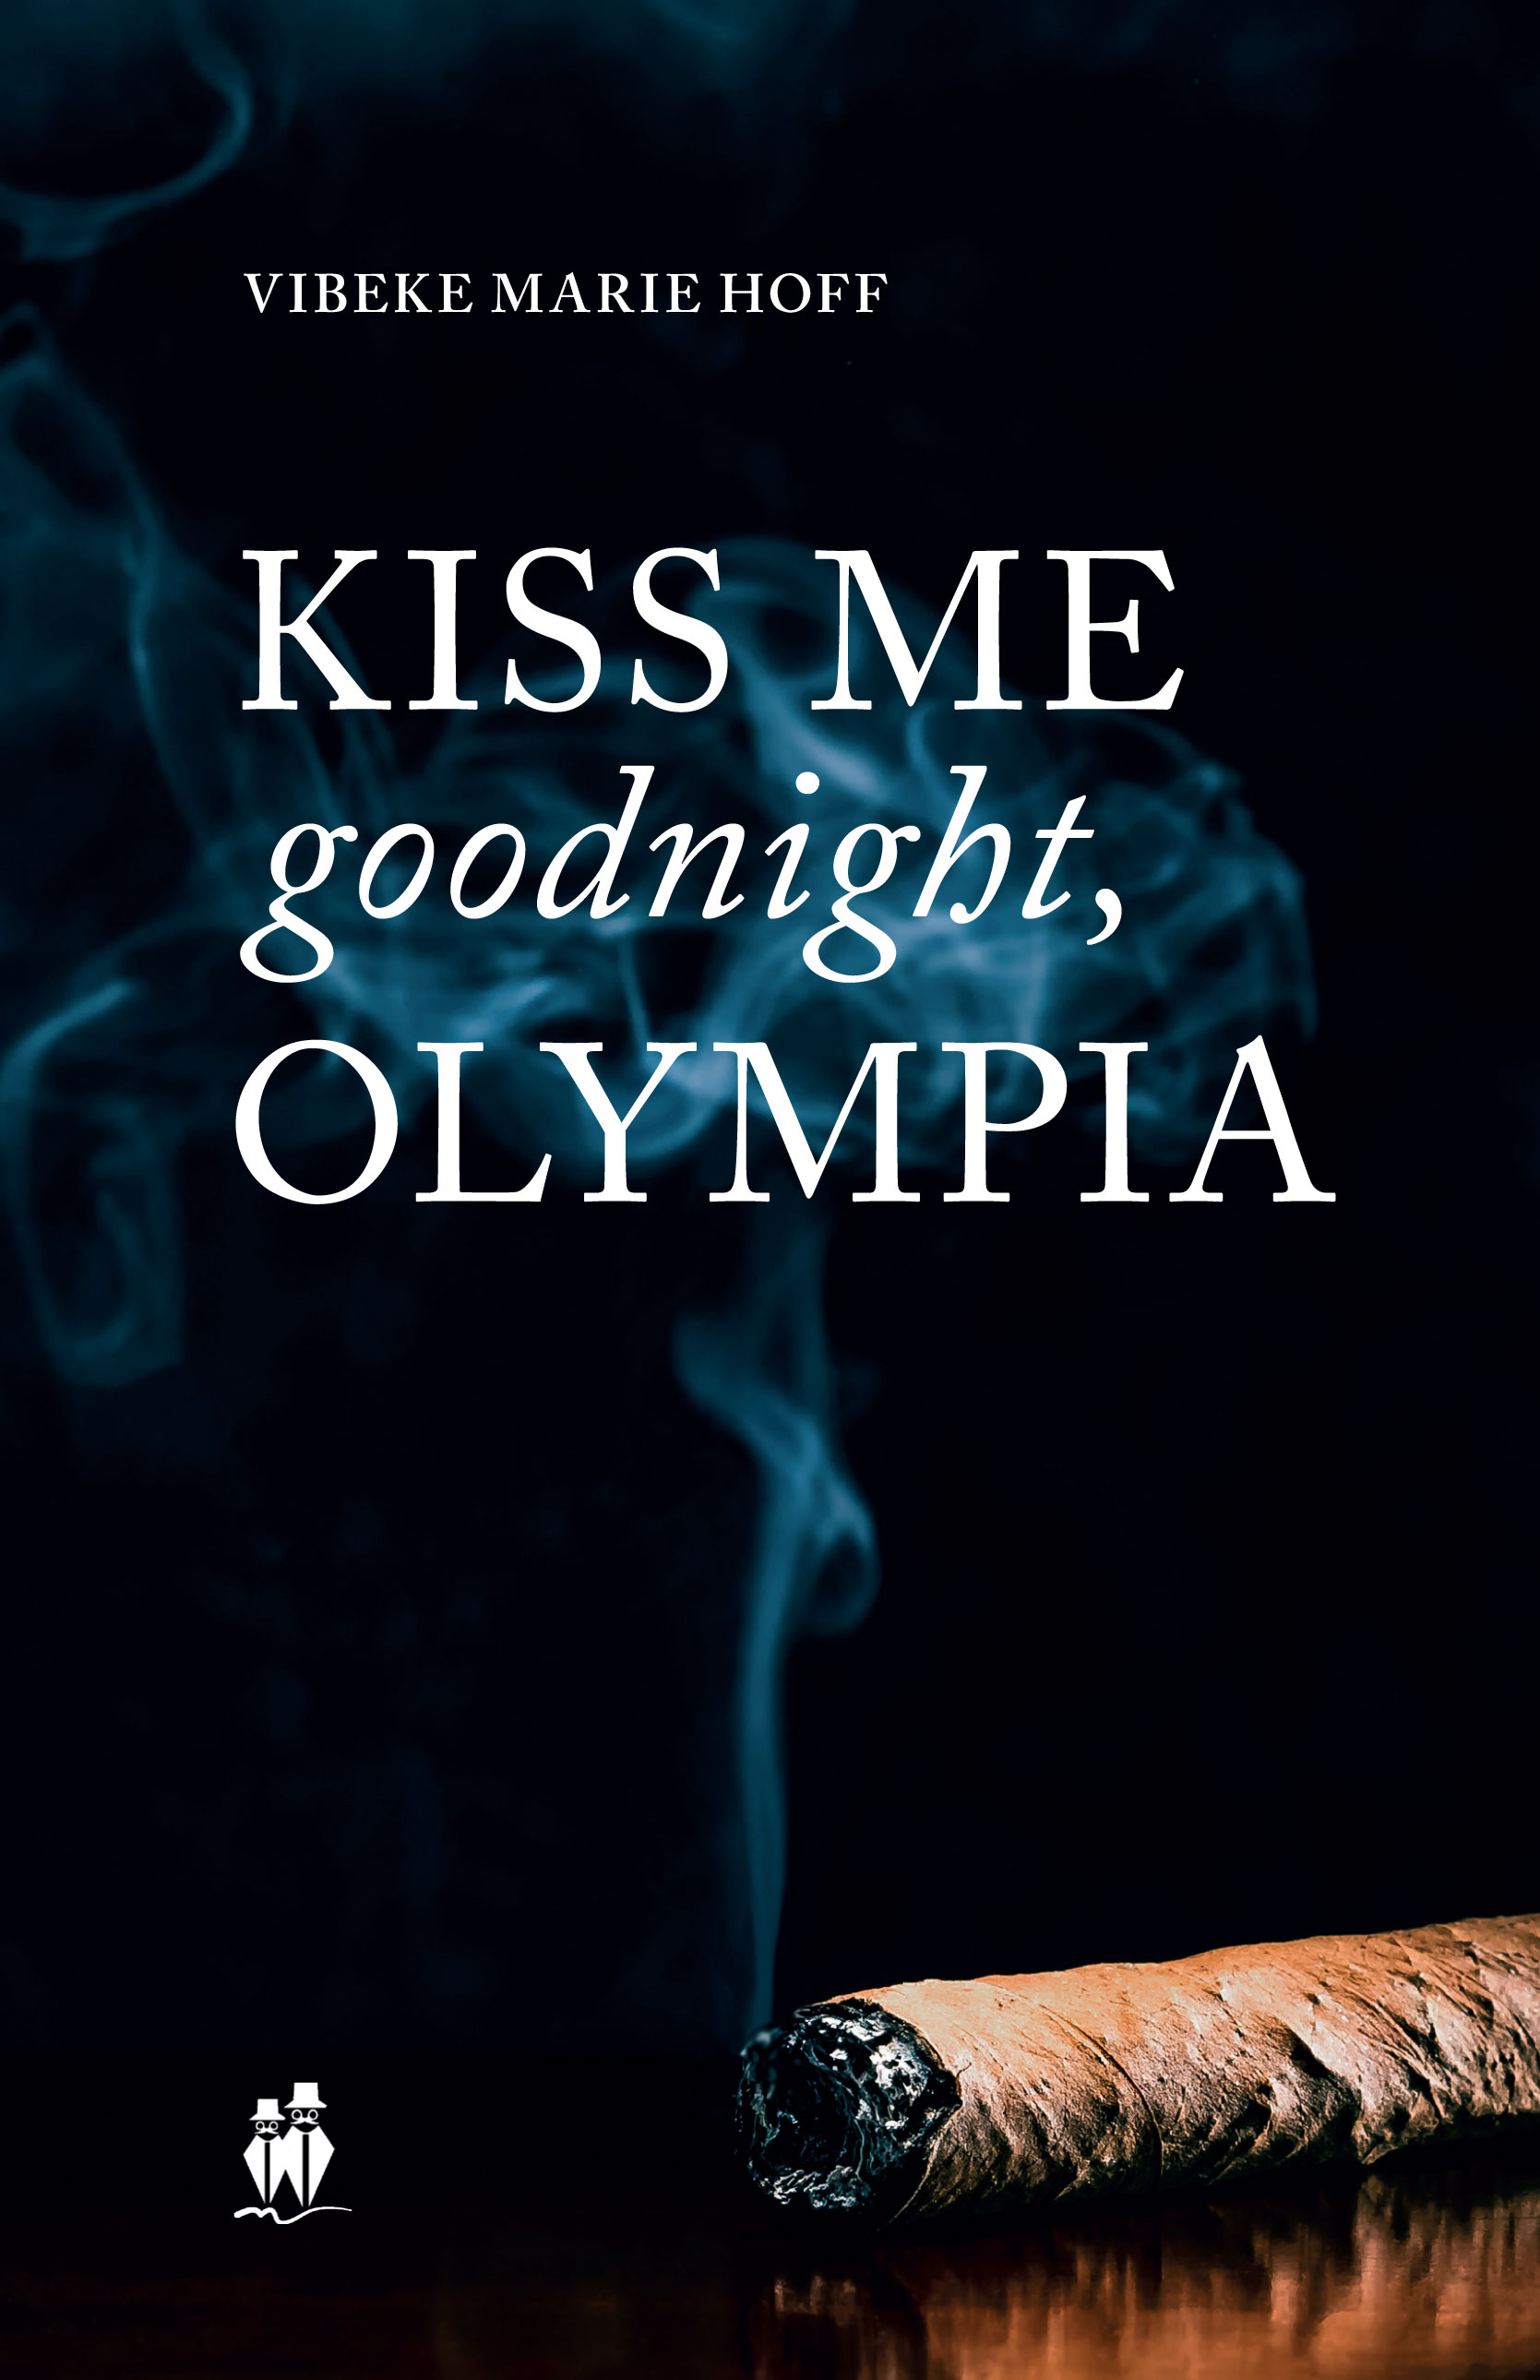 Kiss me goodnight Olympia